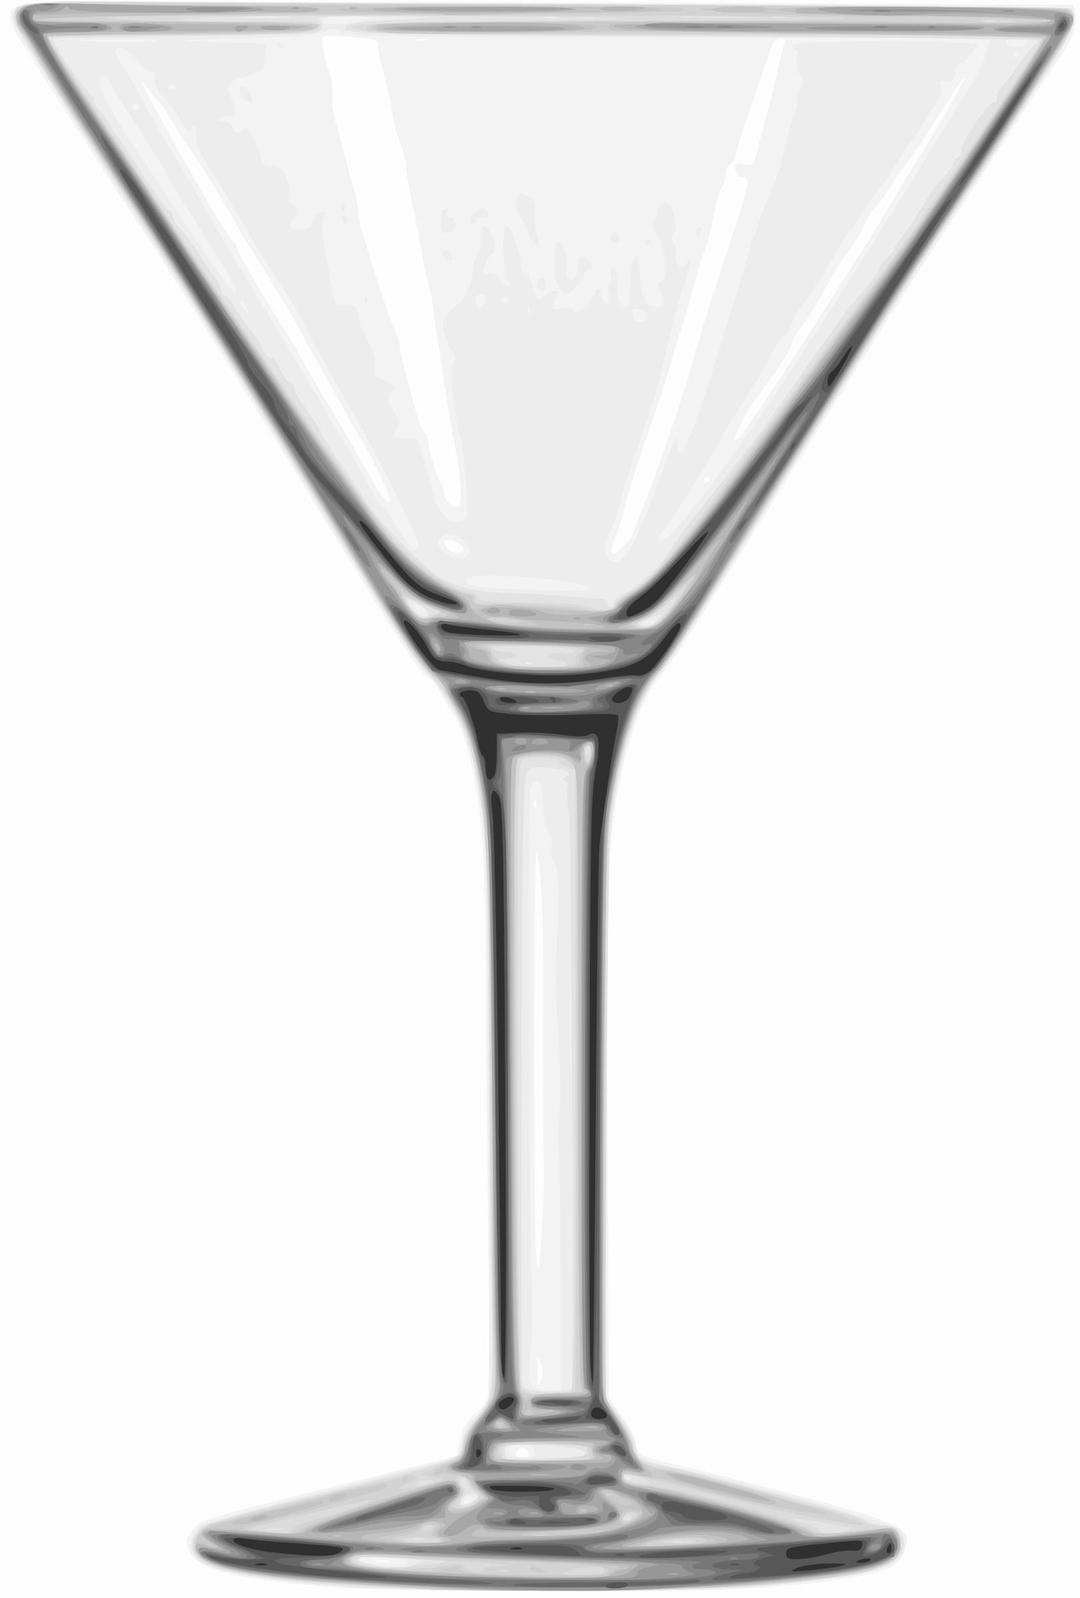 Cocktail Glass (Martini) png transparent